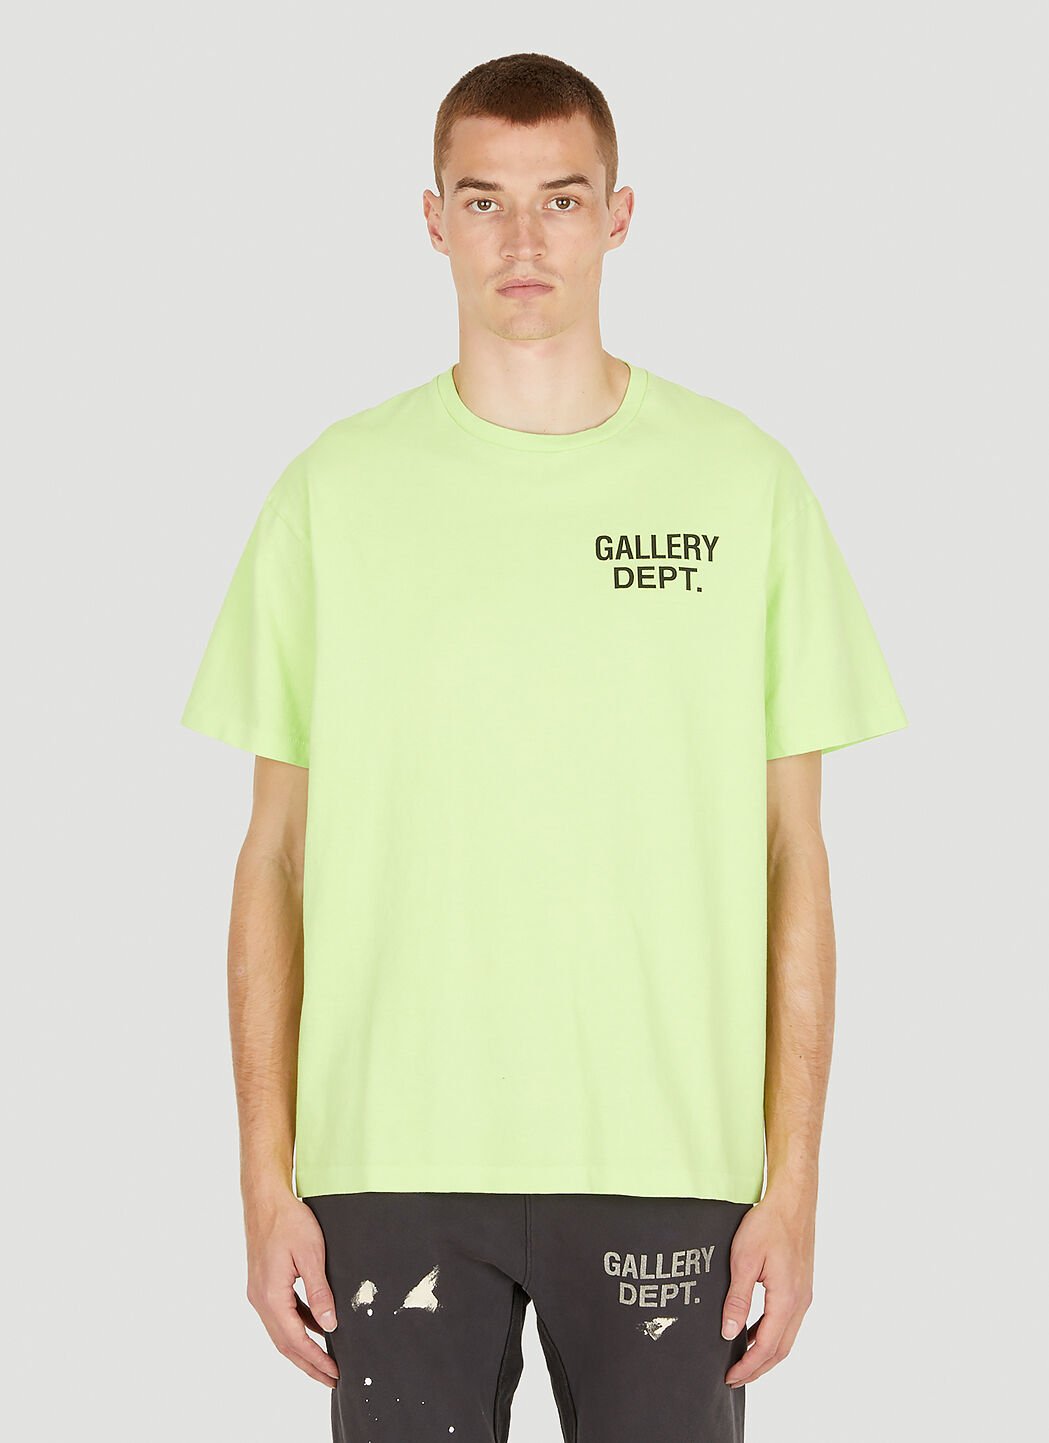 Gallery Dept. Souvenir T-Shirt ホワイト gdp0153021